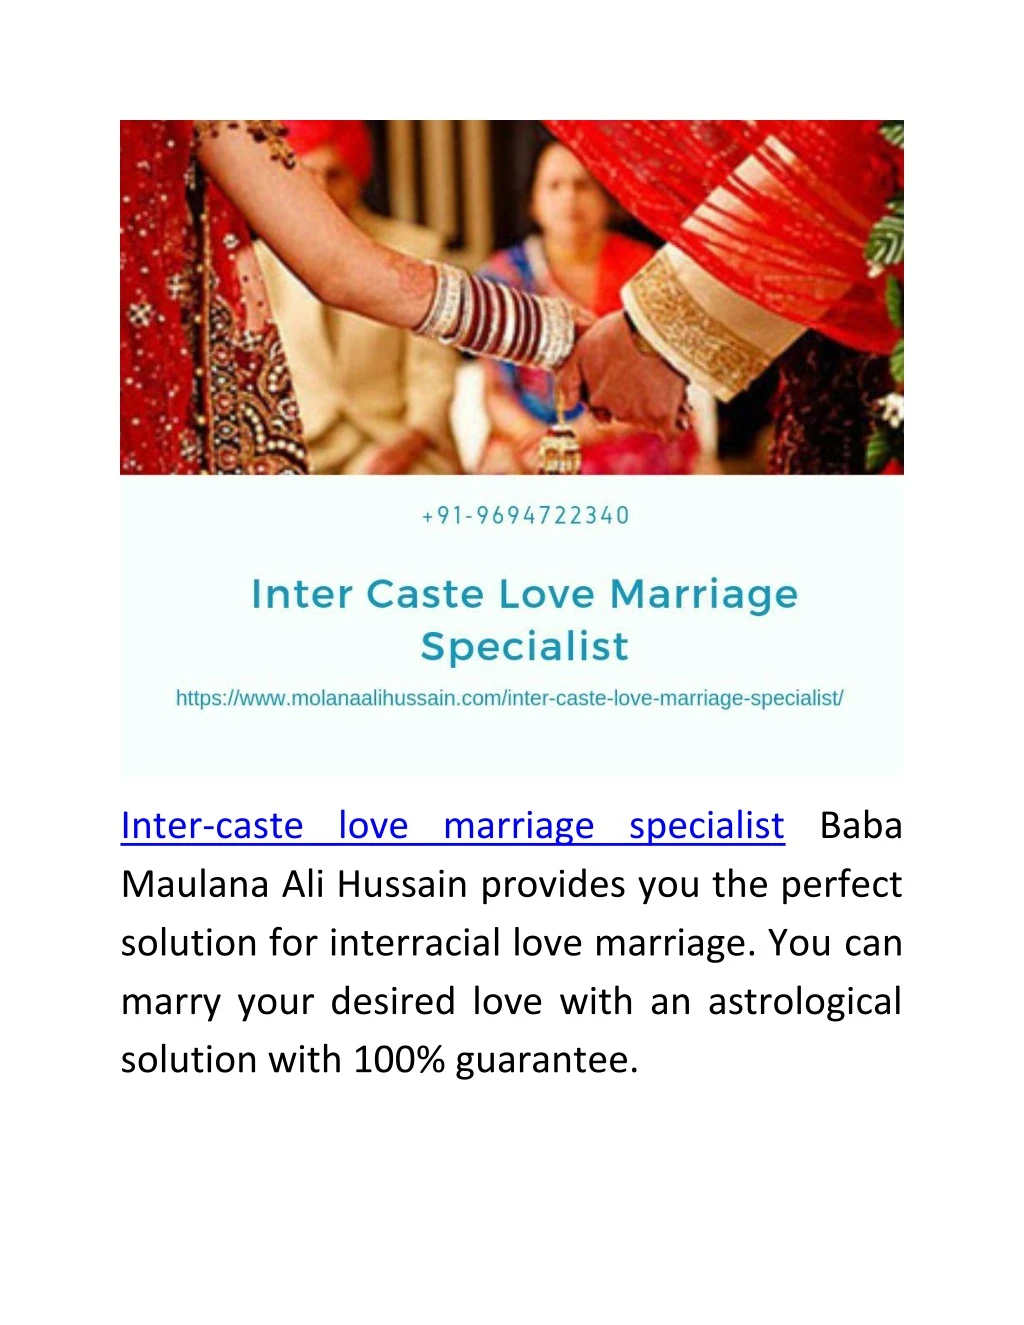 inter caste love marriage specialist baba maulana